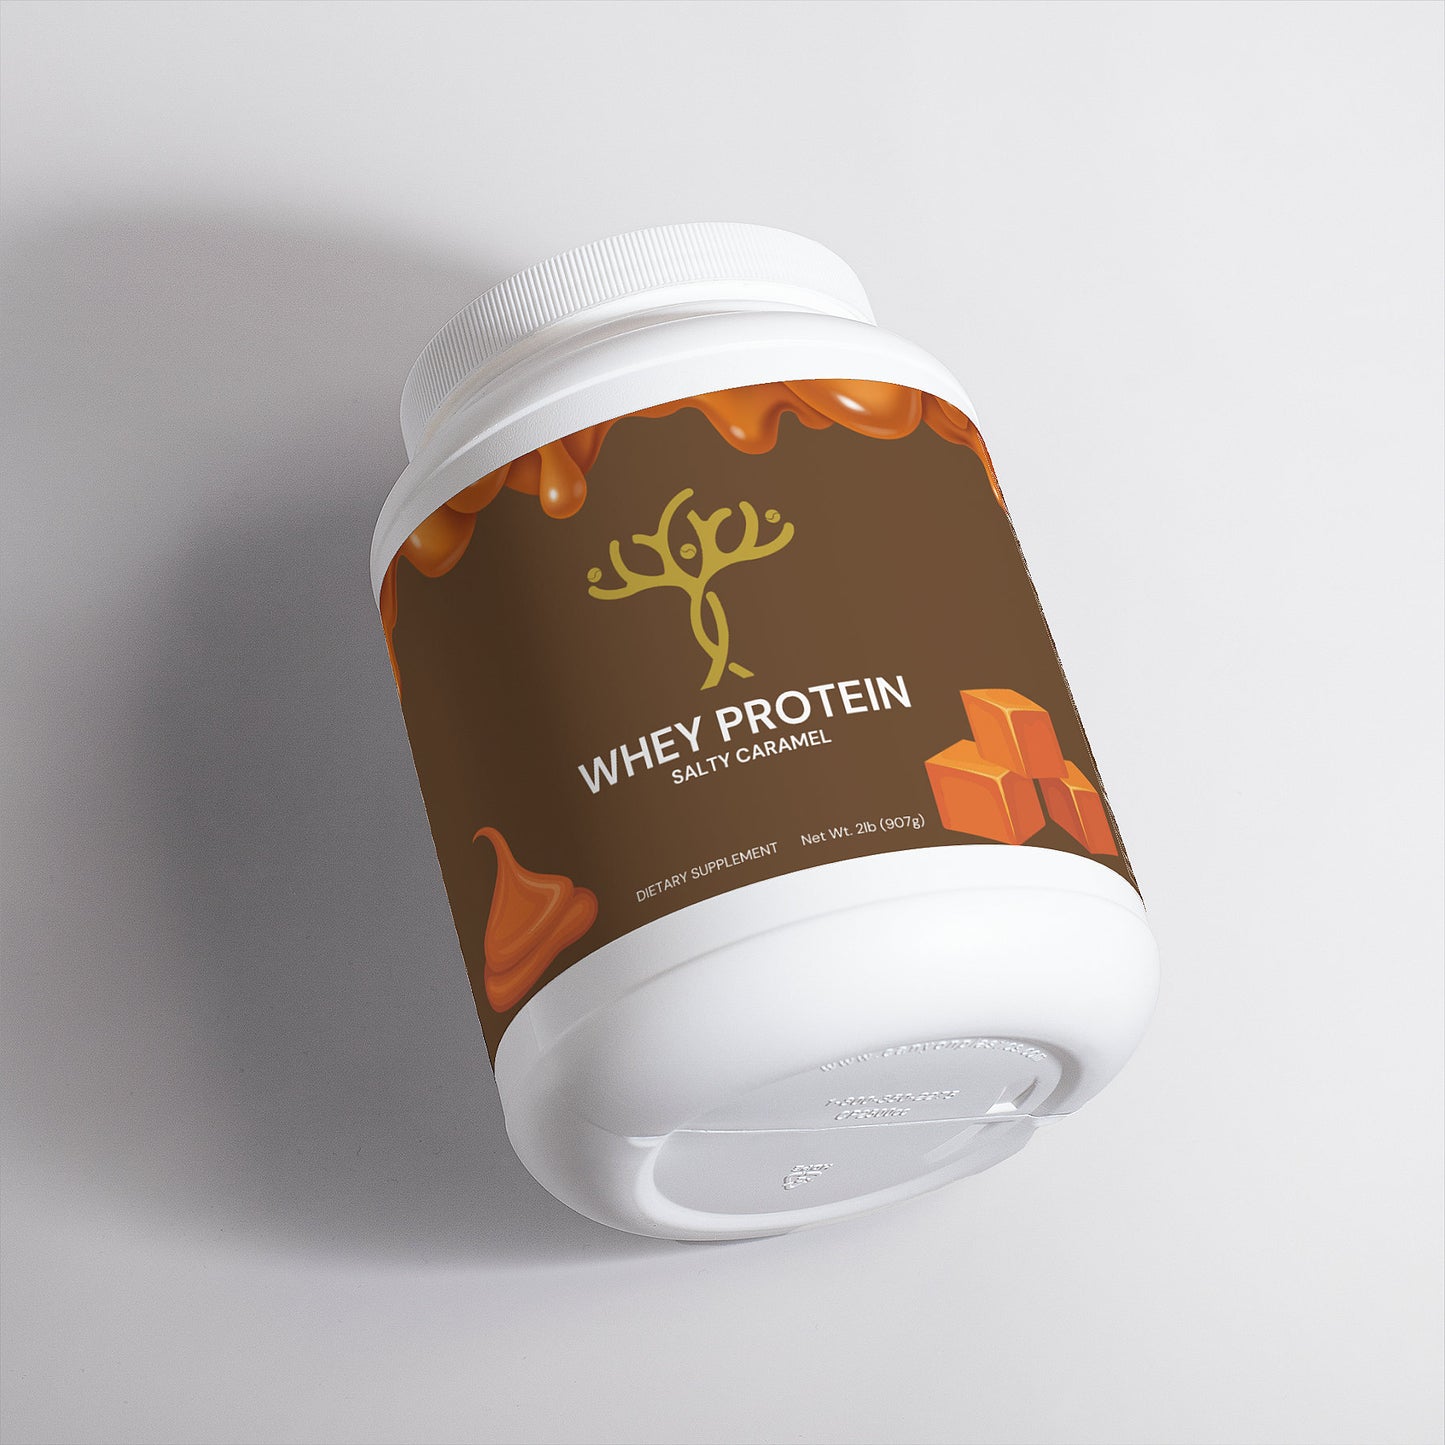 Whey Protein (Salty Caramel)